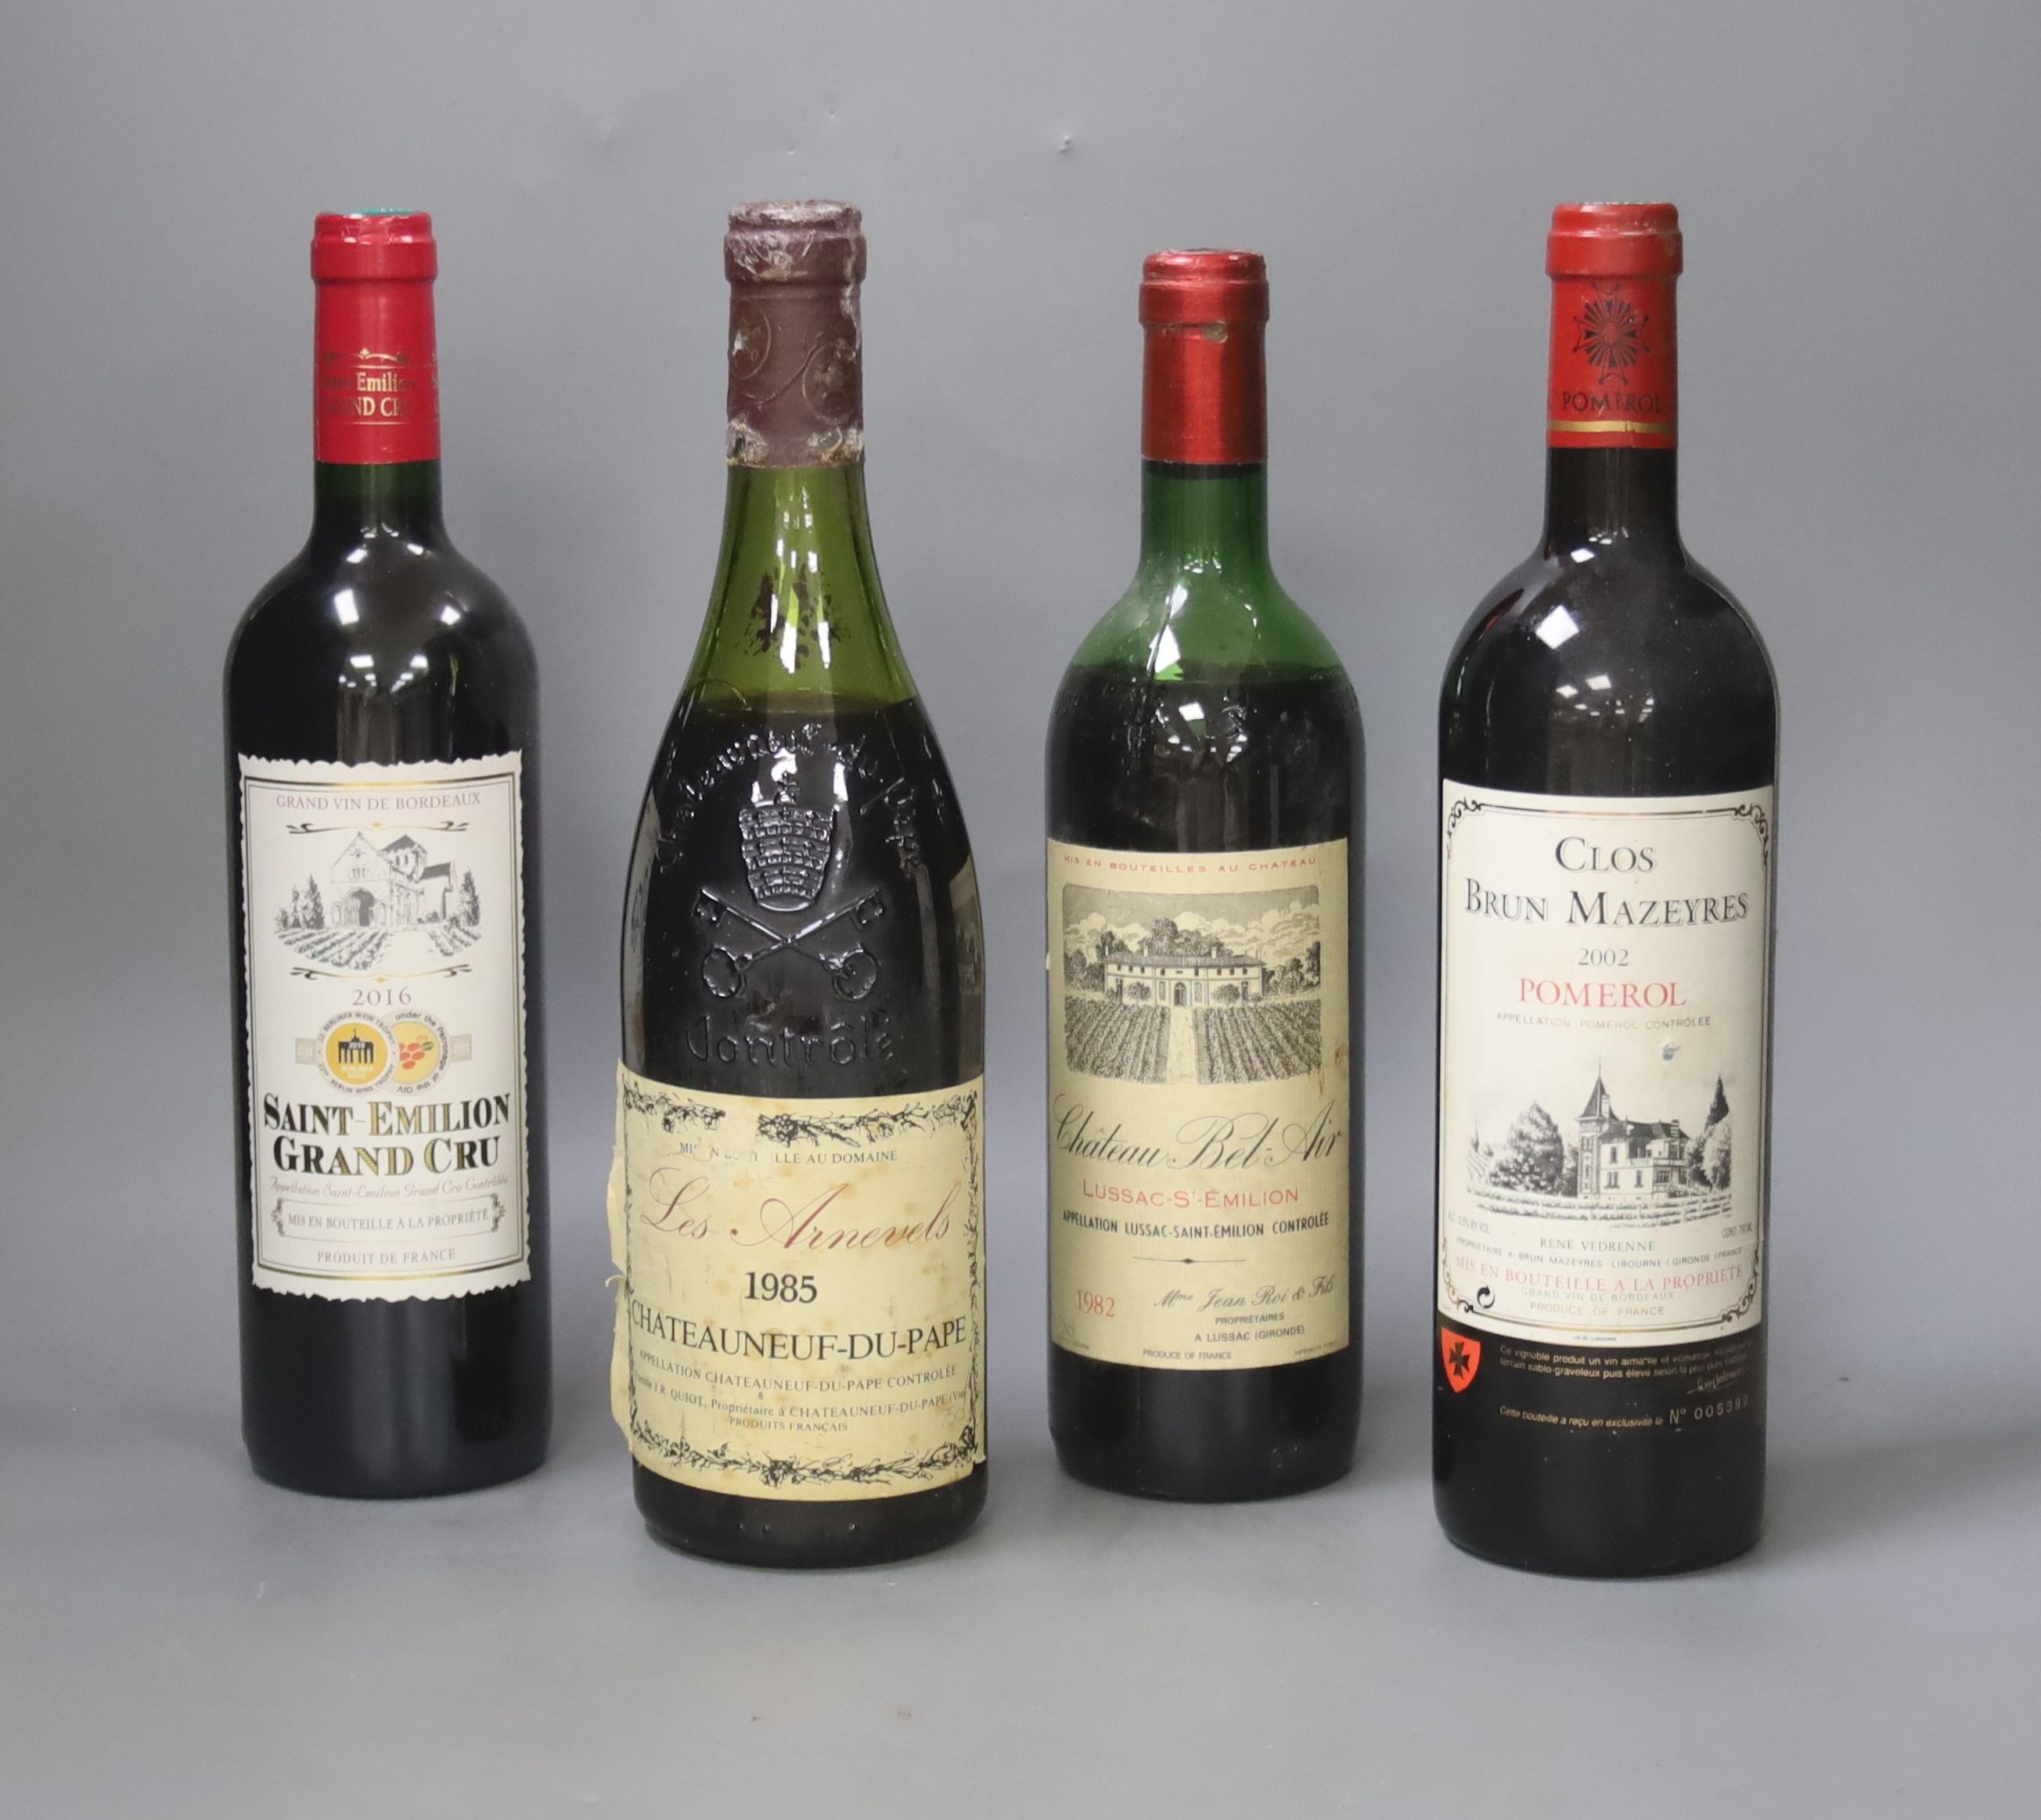 4 bottles of red wine - Chateau Neuf du Pape 1985, Pomerol 2002, Saint-Emillion grand cru 2016, Chateau Bel-Air 1982